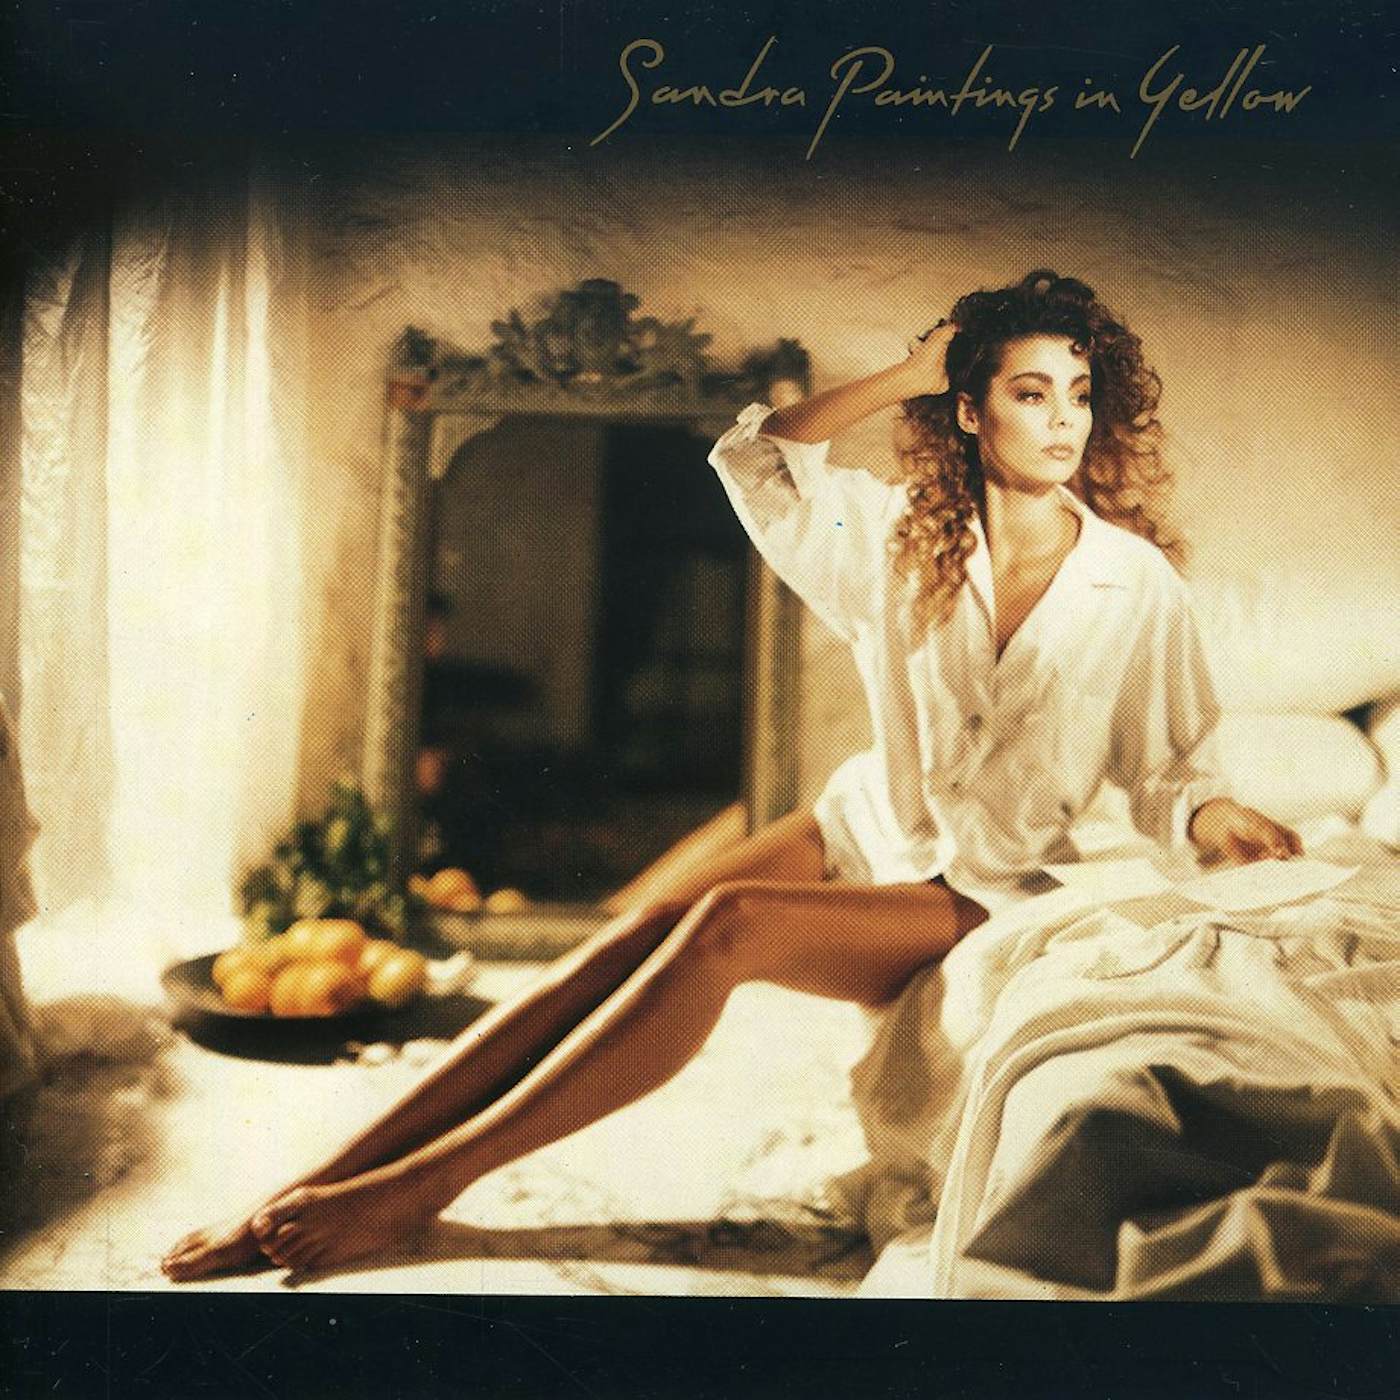 Sandra PAINTINGS IN YELLOW CD